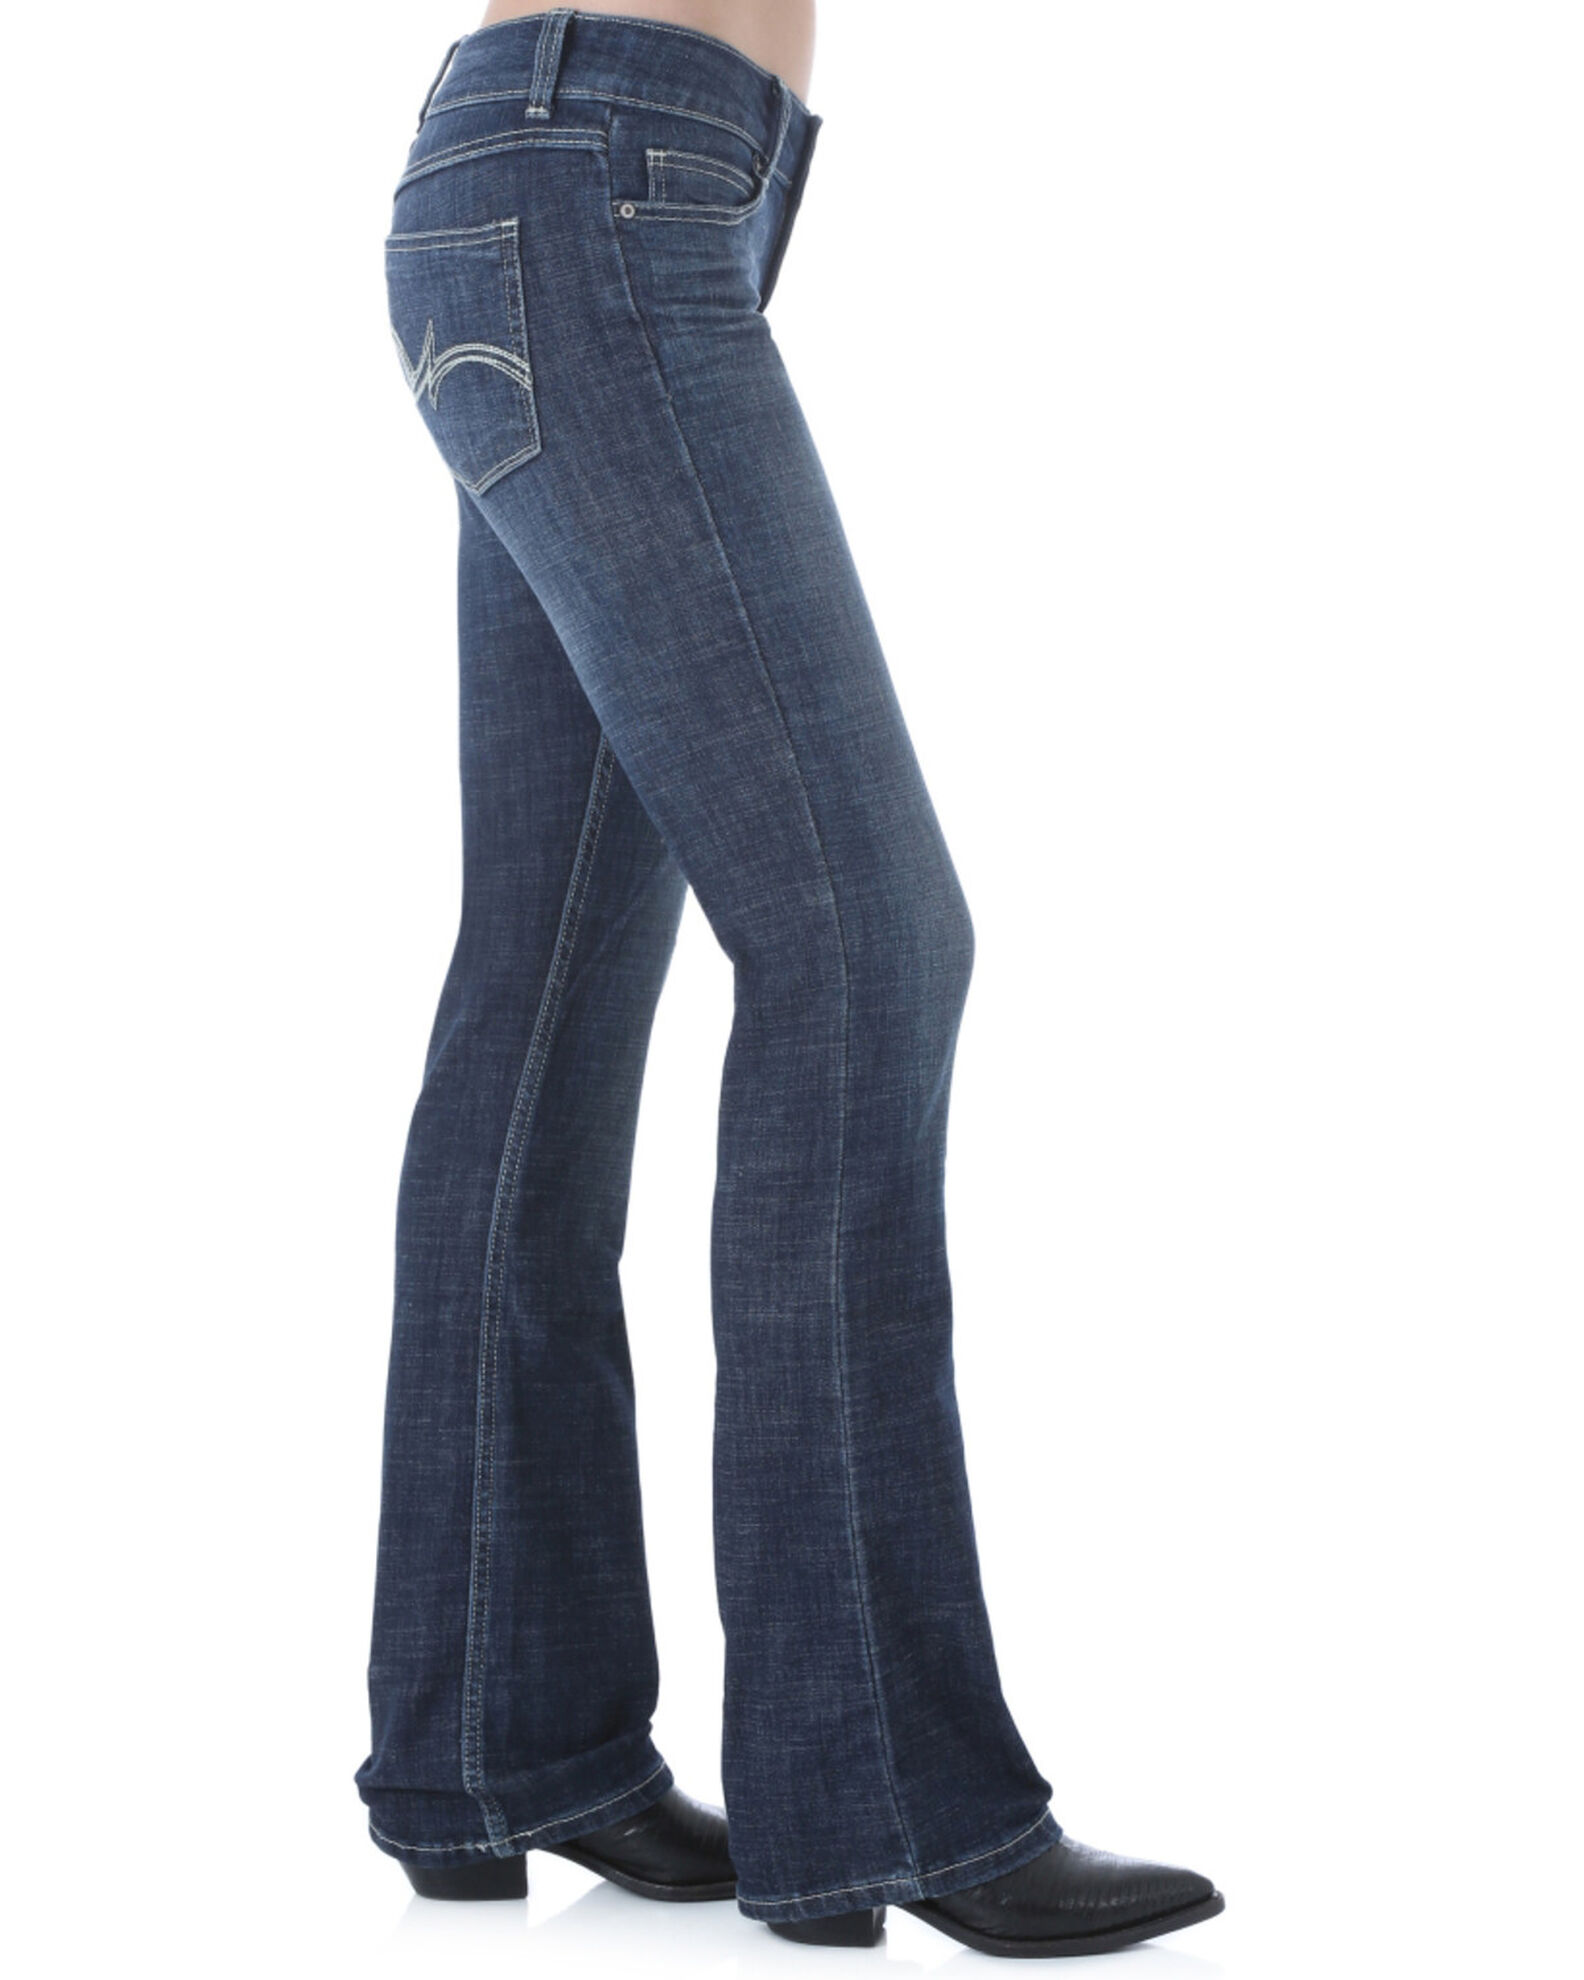 Product Name: Wrangler Women's Dark Wash Bootcut Jeans